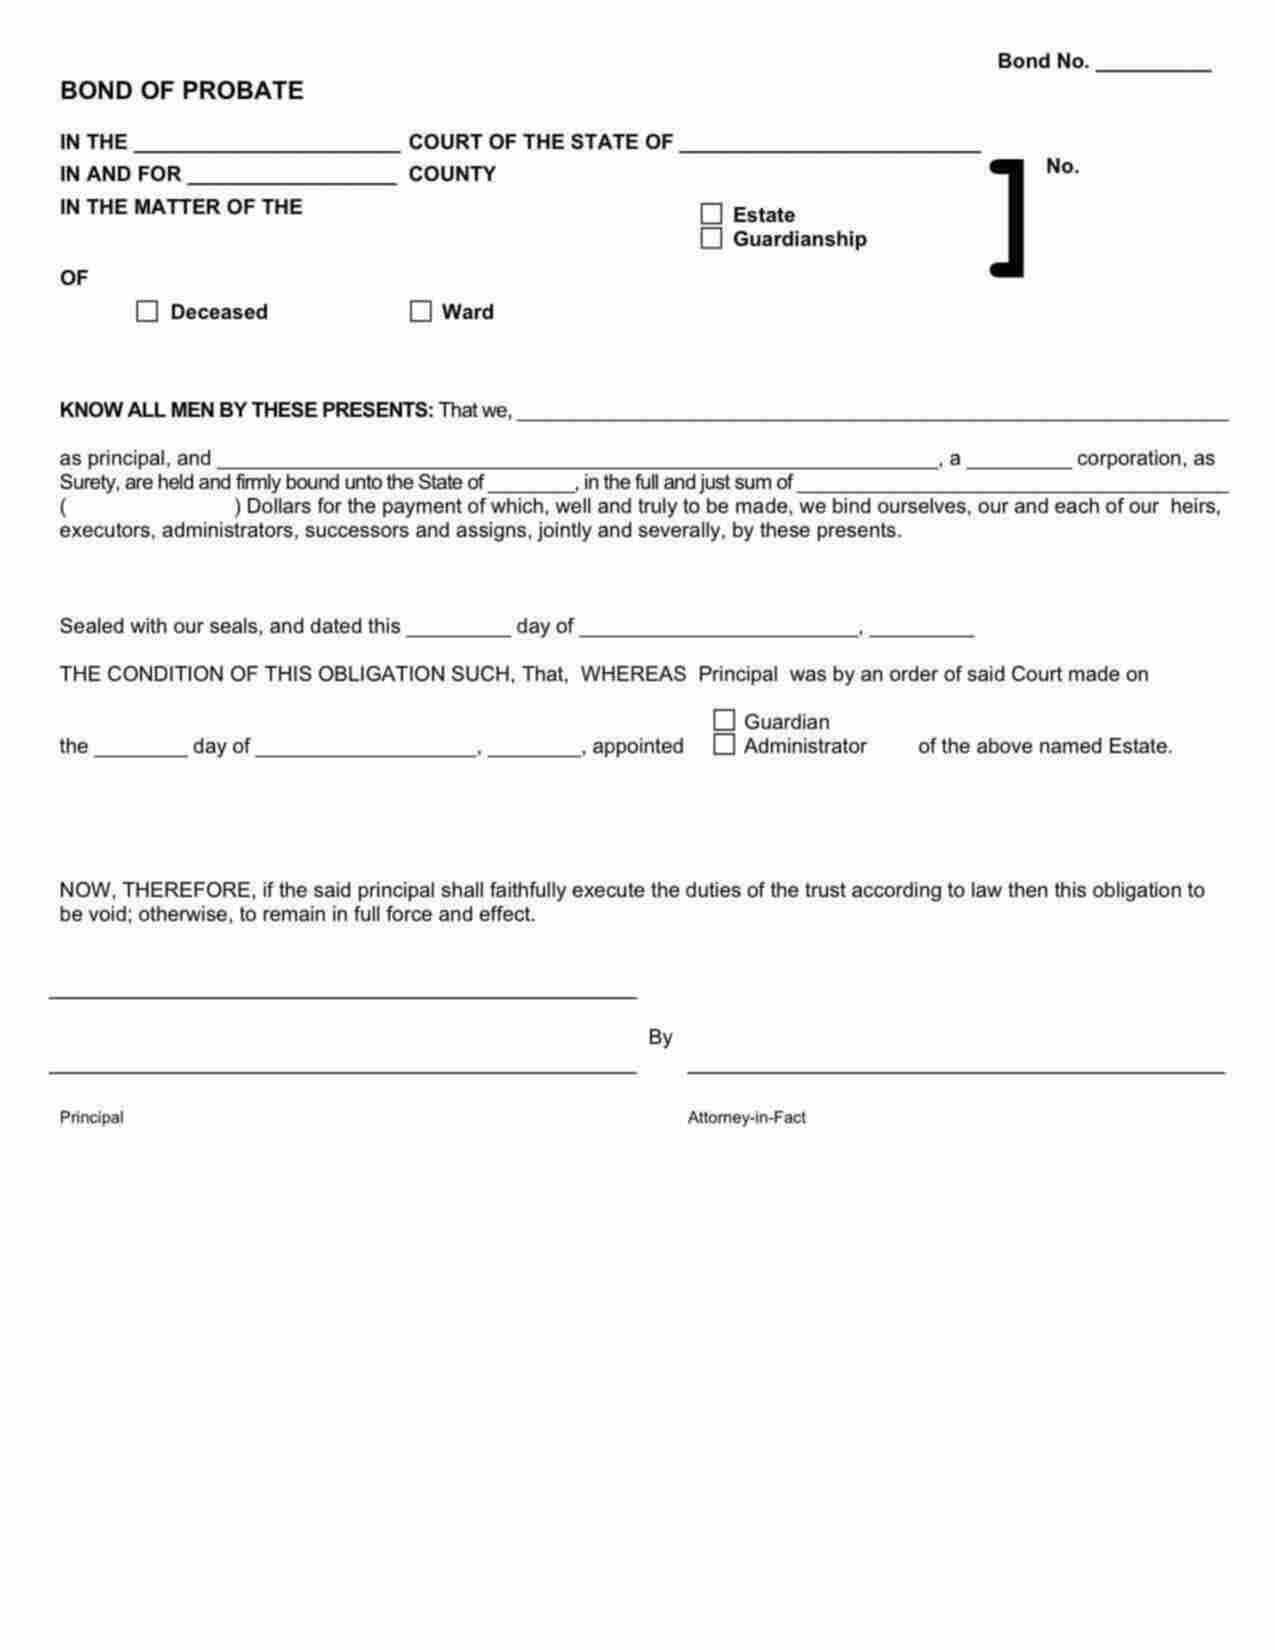 Illinois Administrator/Executor Bond Form